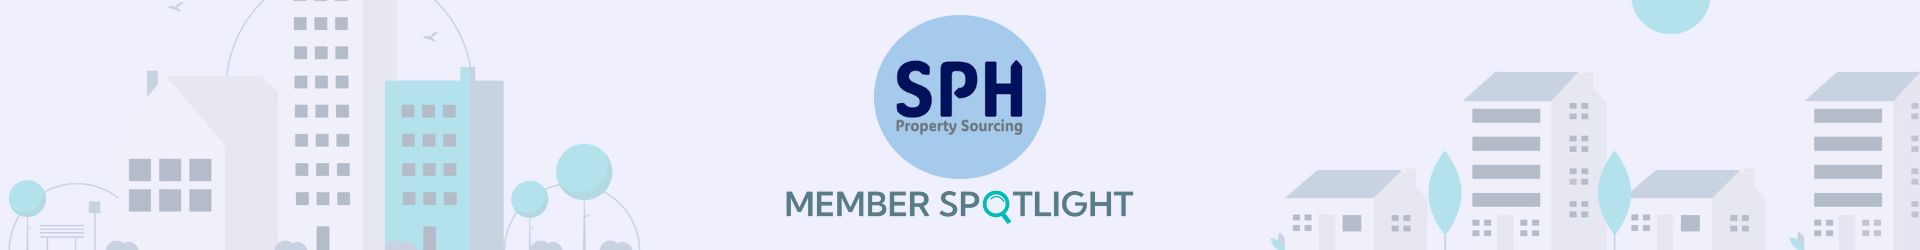 Member Spotlight: SPH Property Sourcing